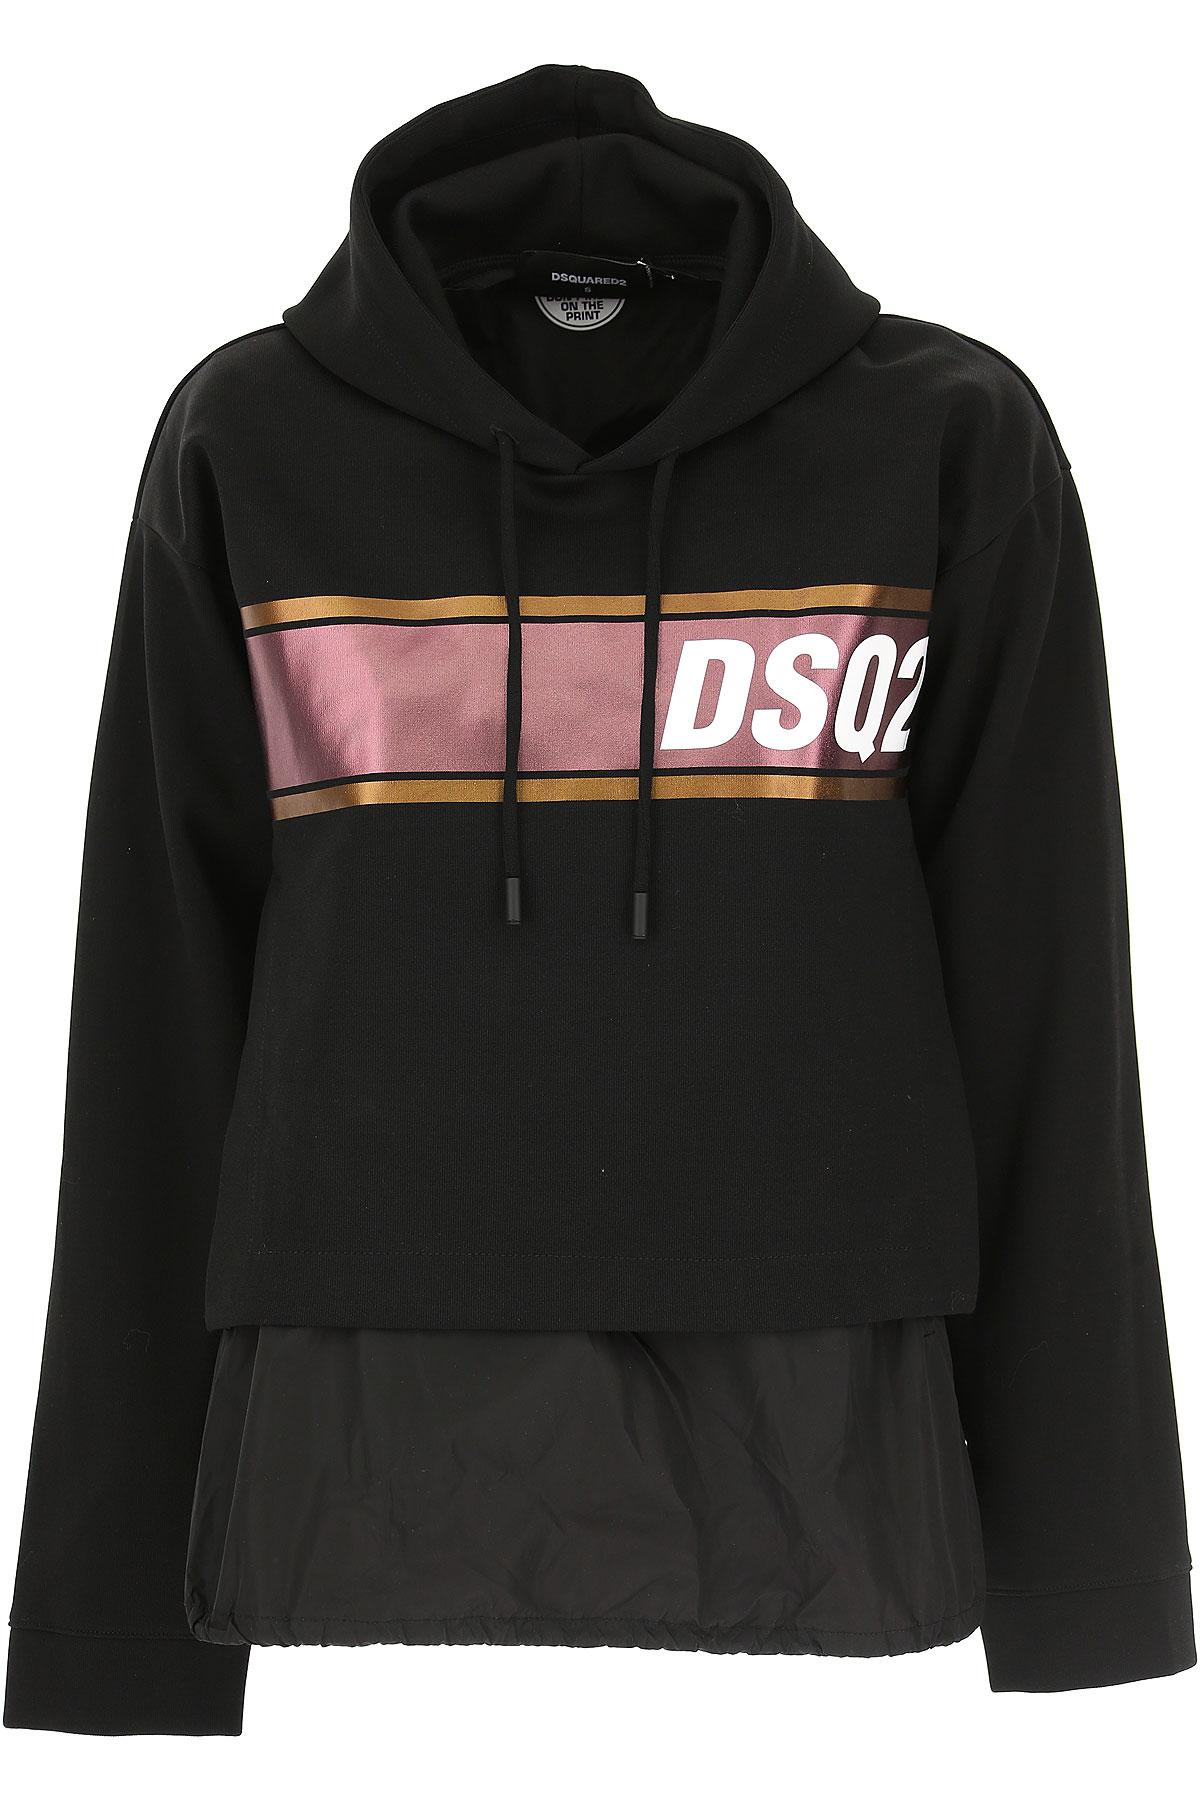 DSquared² Cotton Dsq2 Logo Stripe Hoodie in Black - Lyst